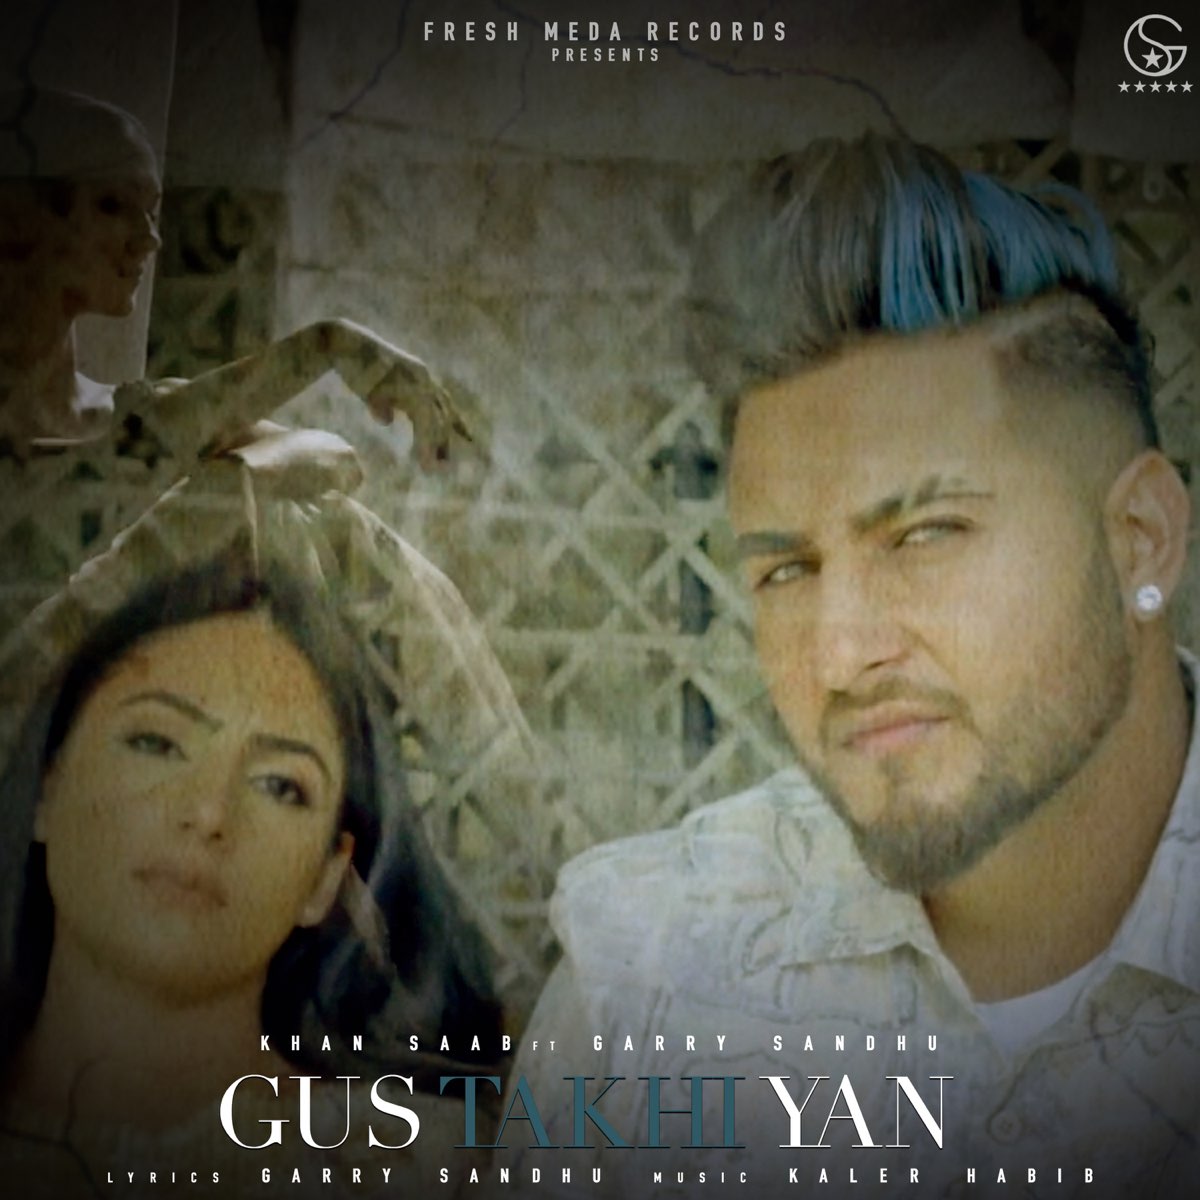 Gustakhiyan (feat. Garry Sandhu) - Single by Khan Saab on Apple Music